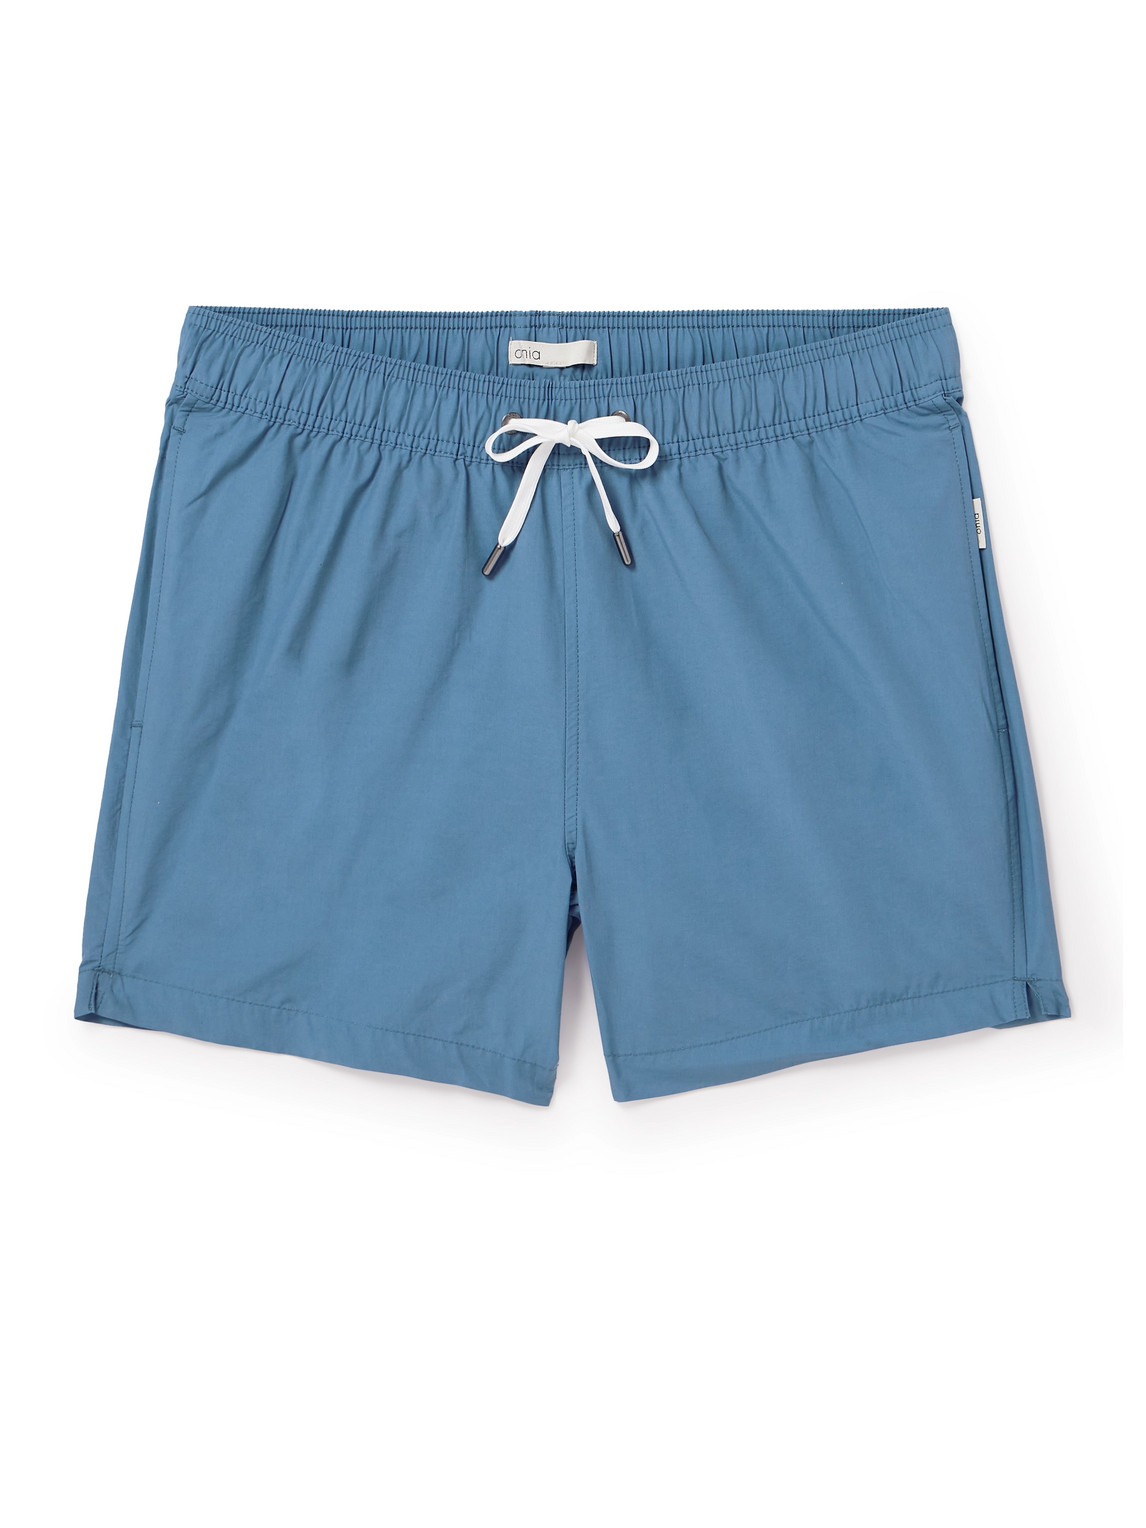 Onia - Charles Straight-Leg Mid-Length Swim Shorts - Men - Blue - XL von Onia